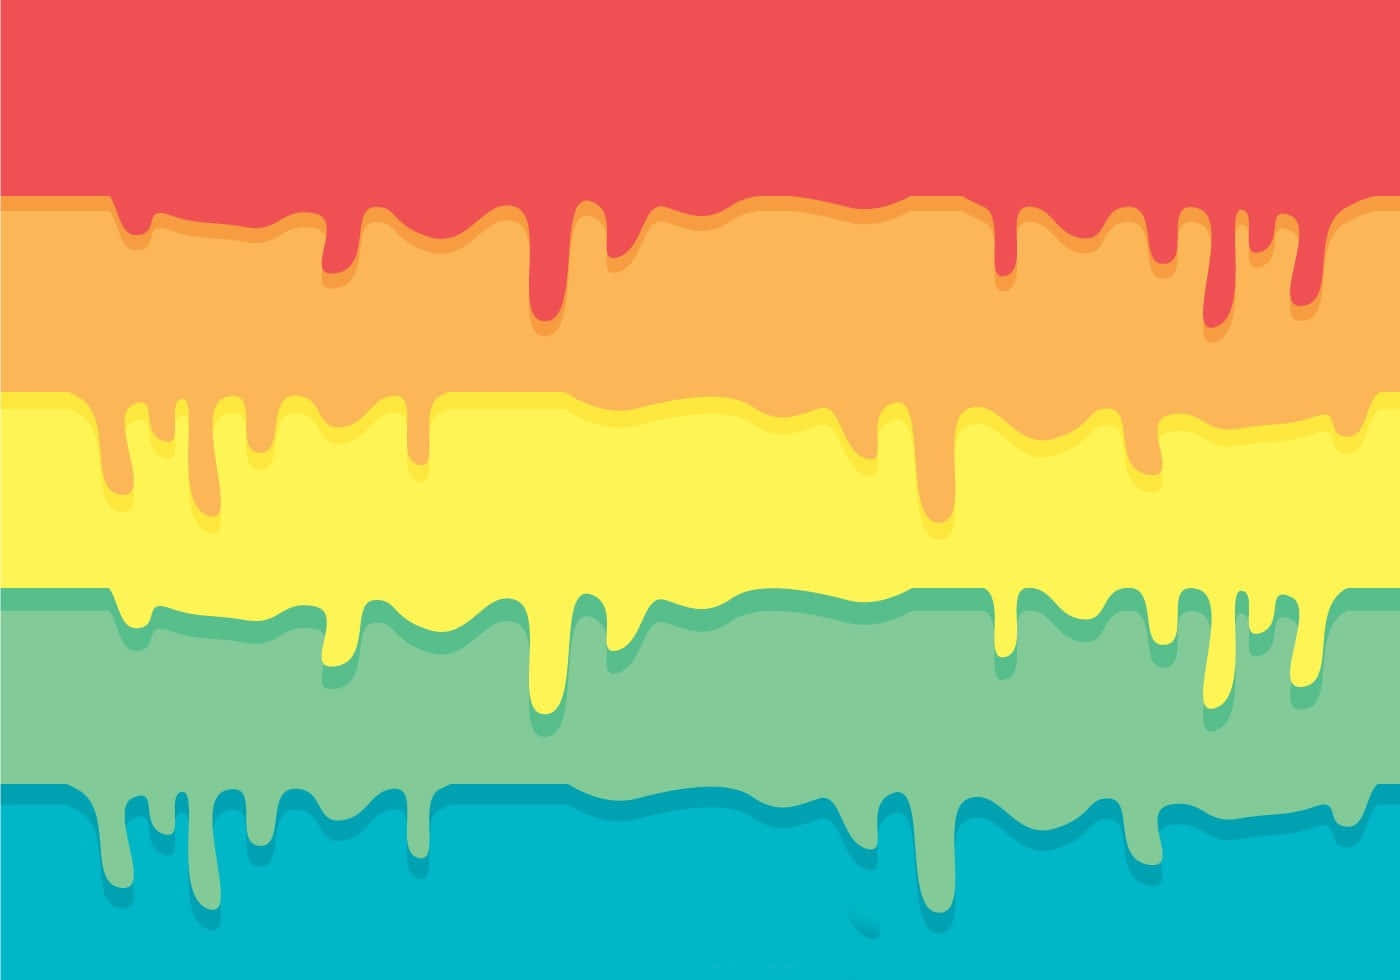 Creative Artistic Explosion of Vibrant Paint Drip Wallpaper